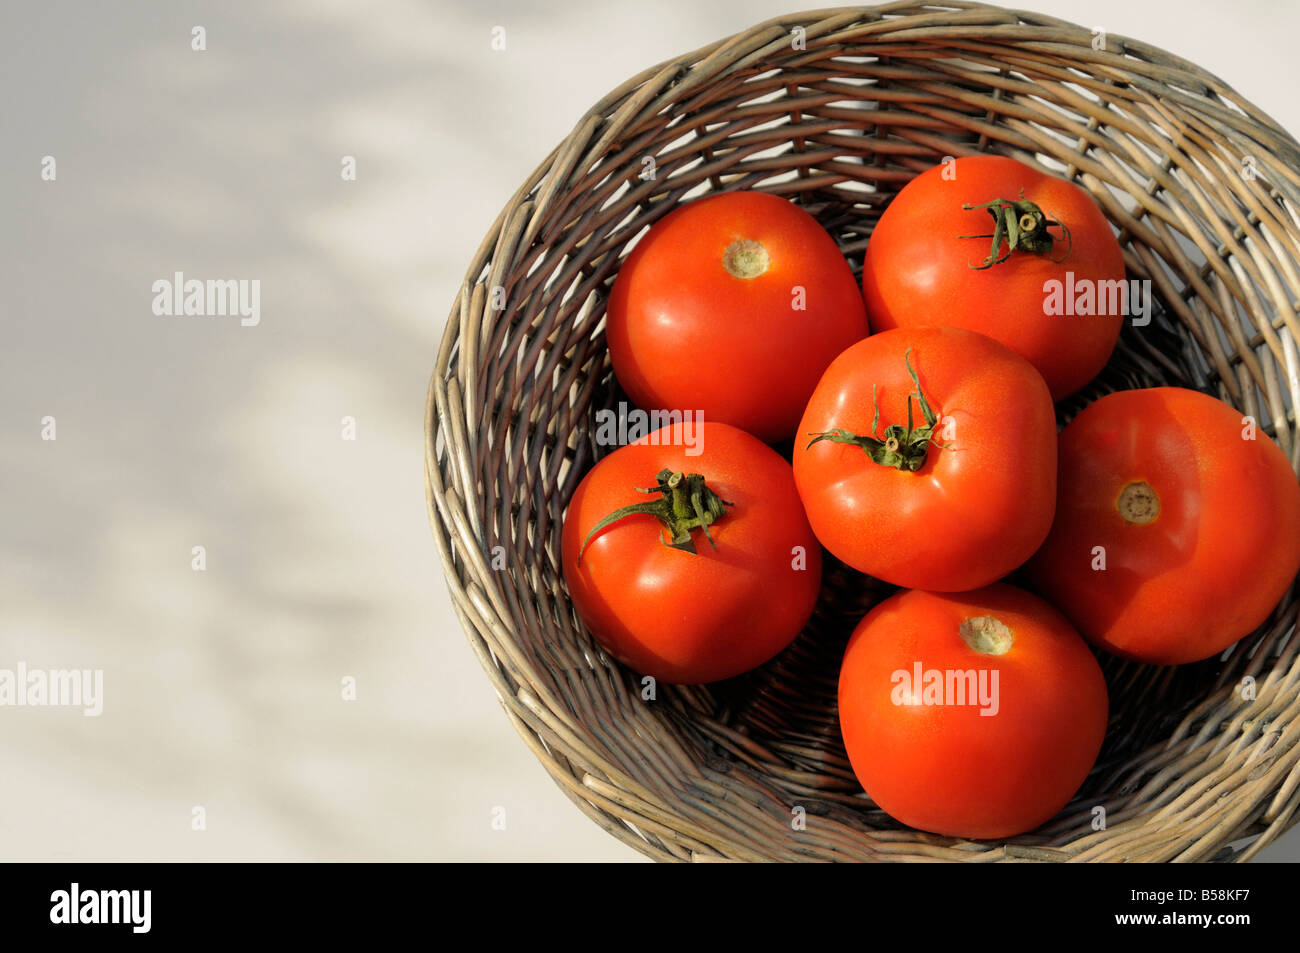 Basket of tomatoes Stock Photo